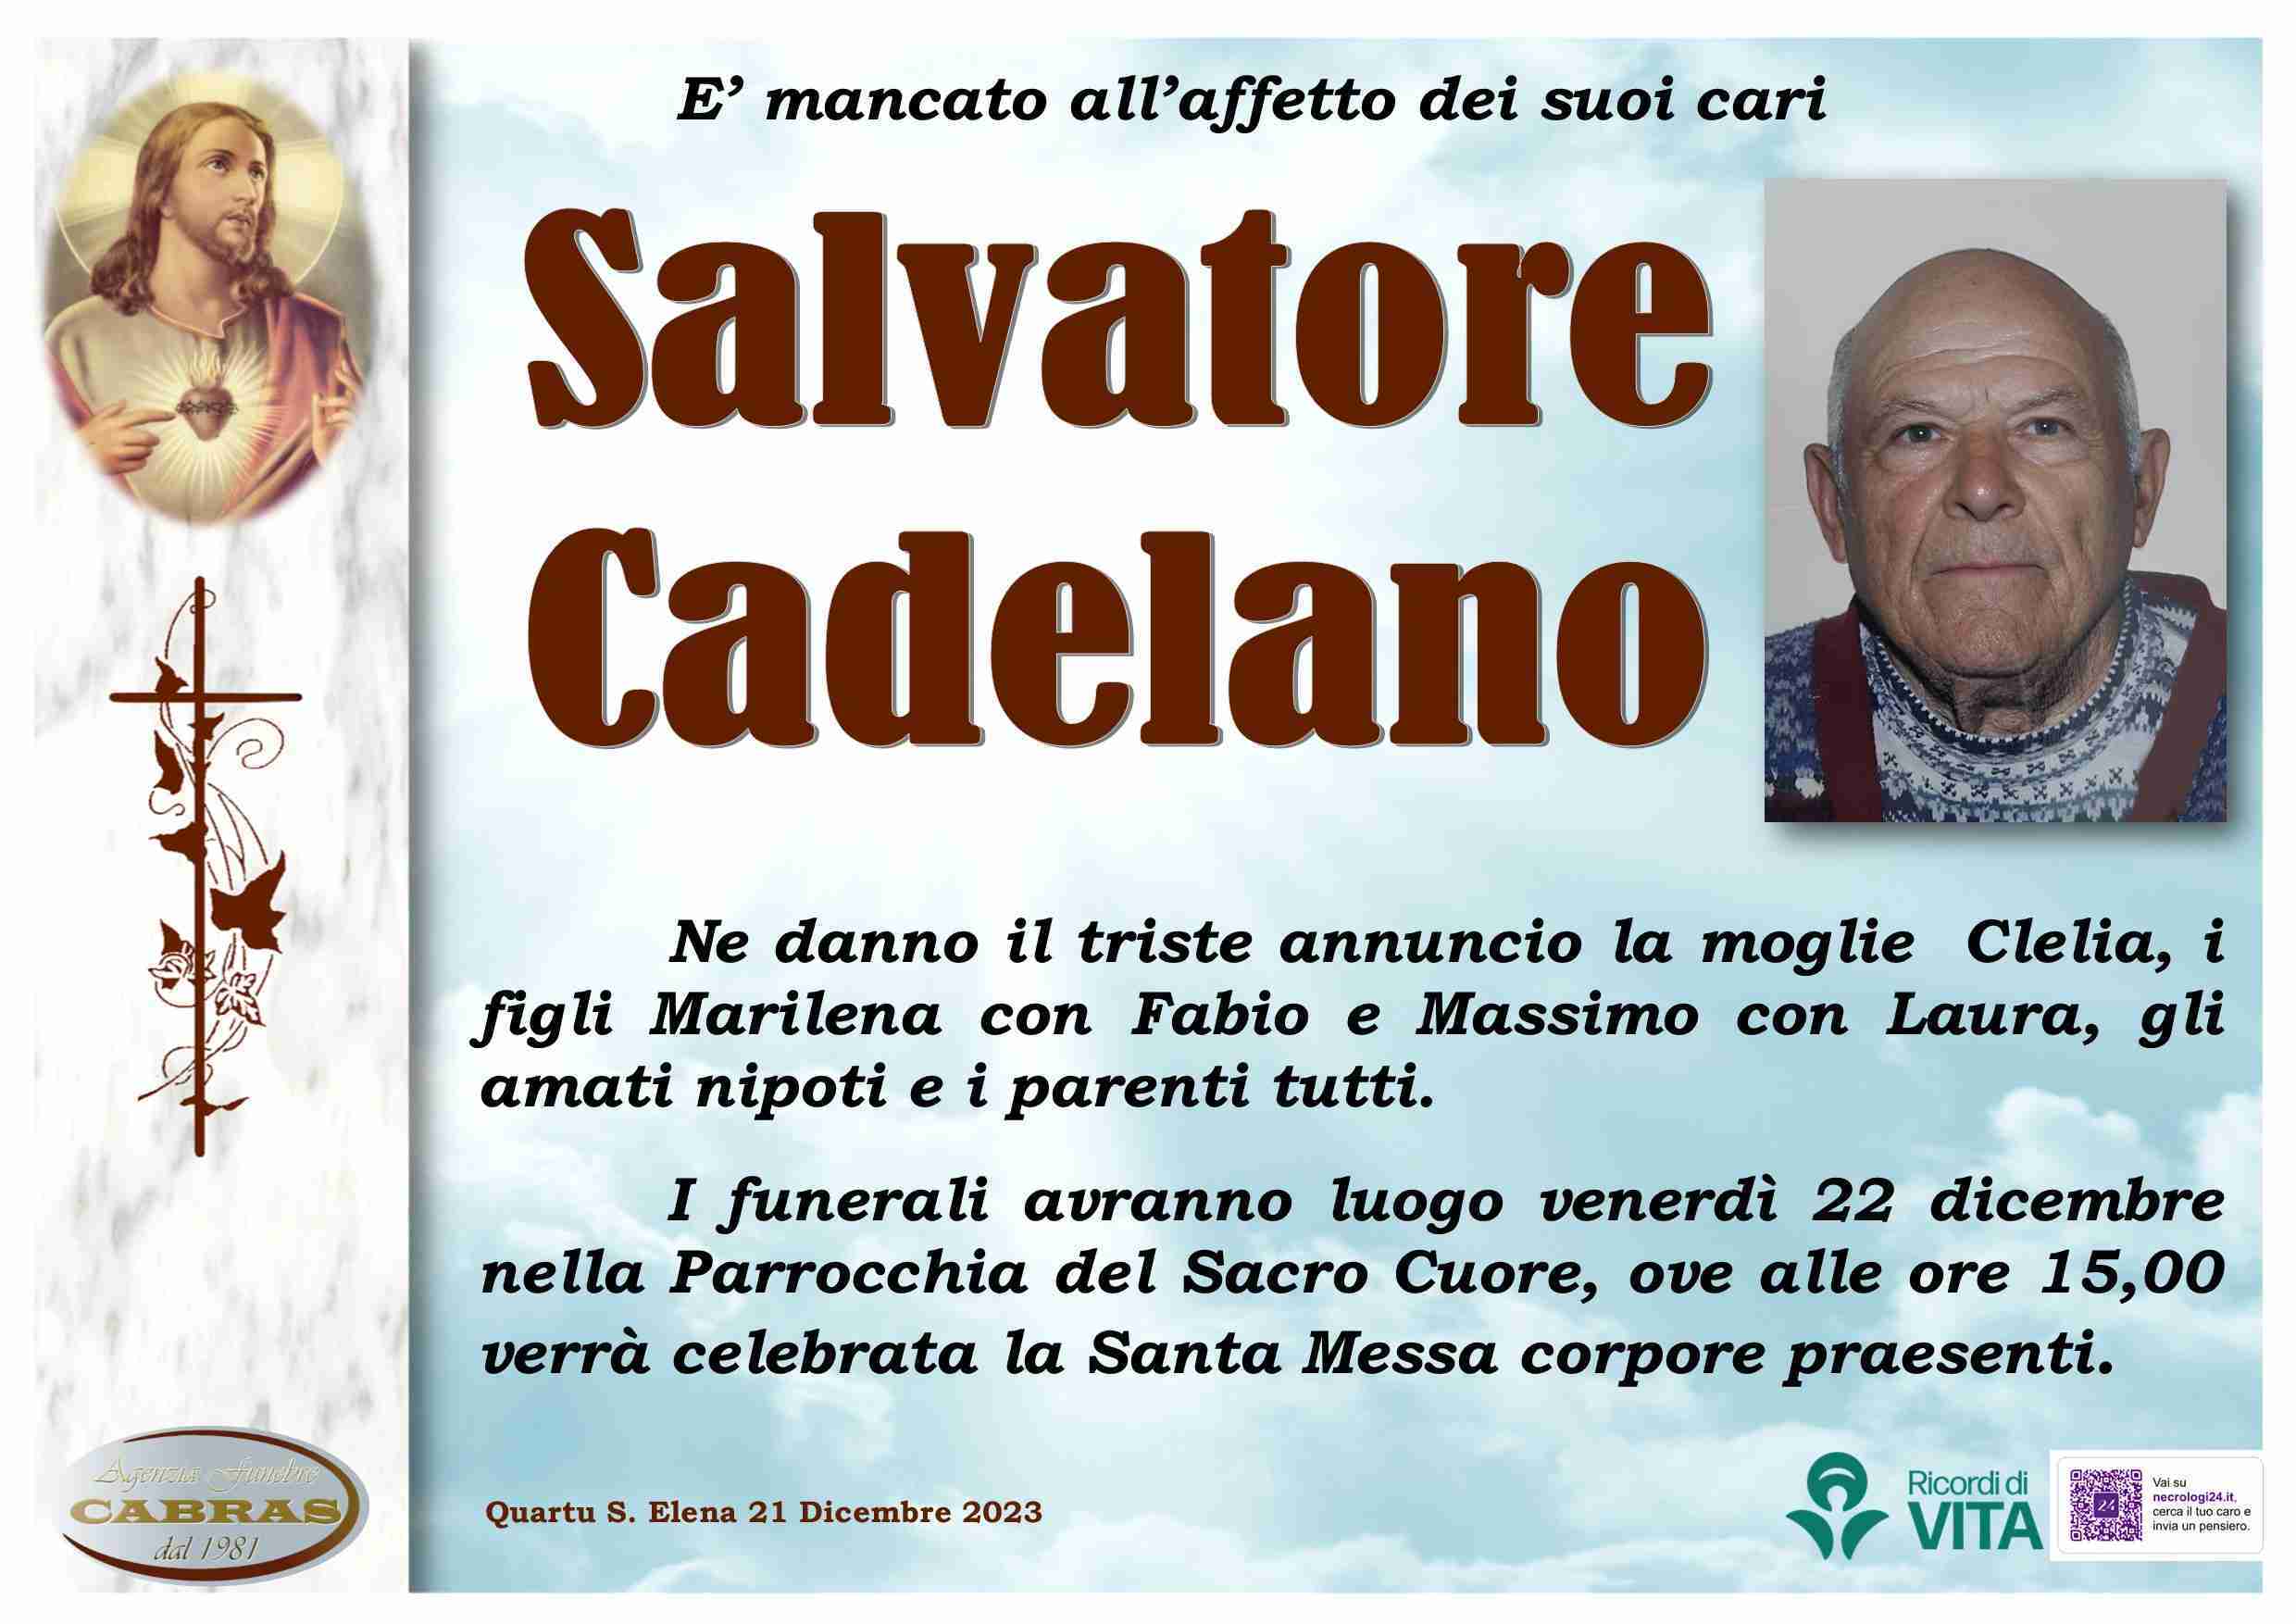 Salvatore Cadelano